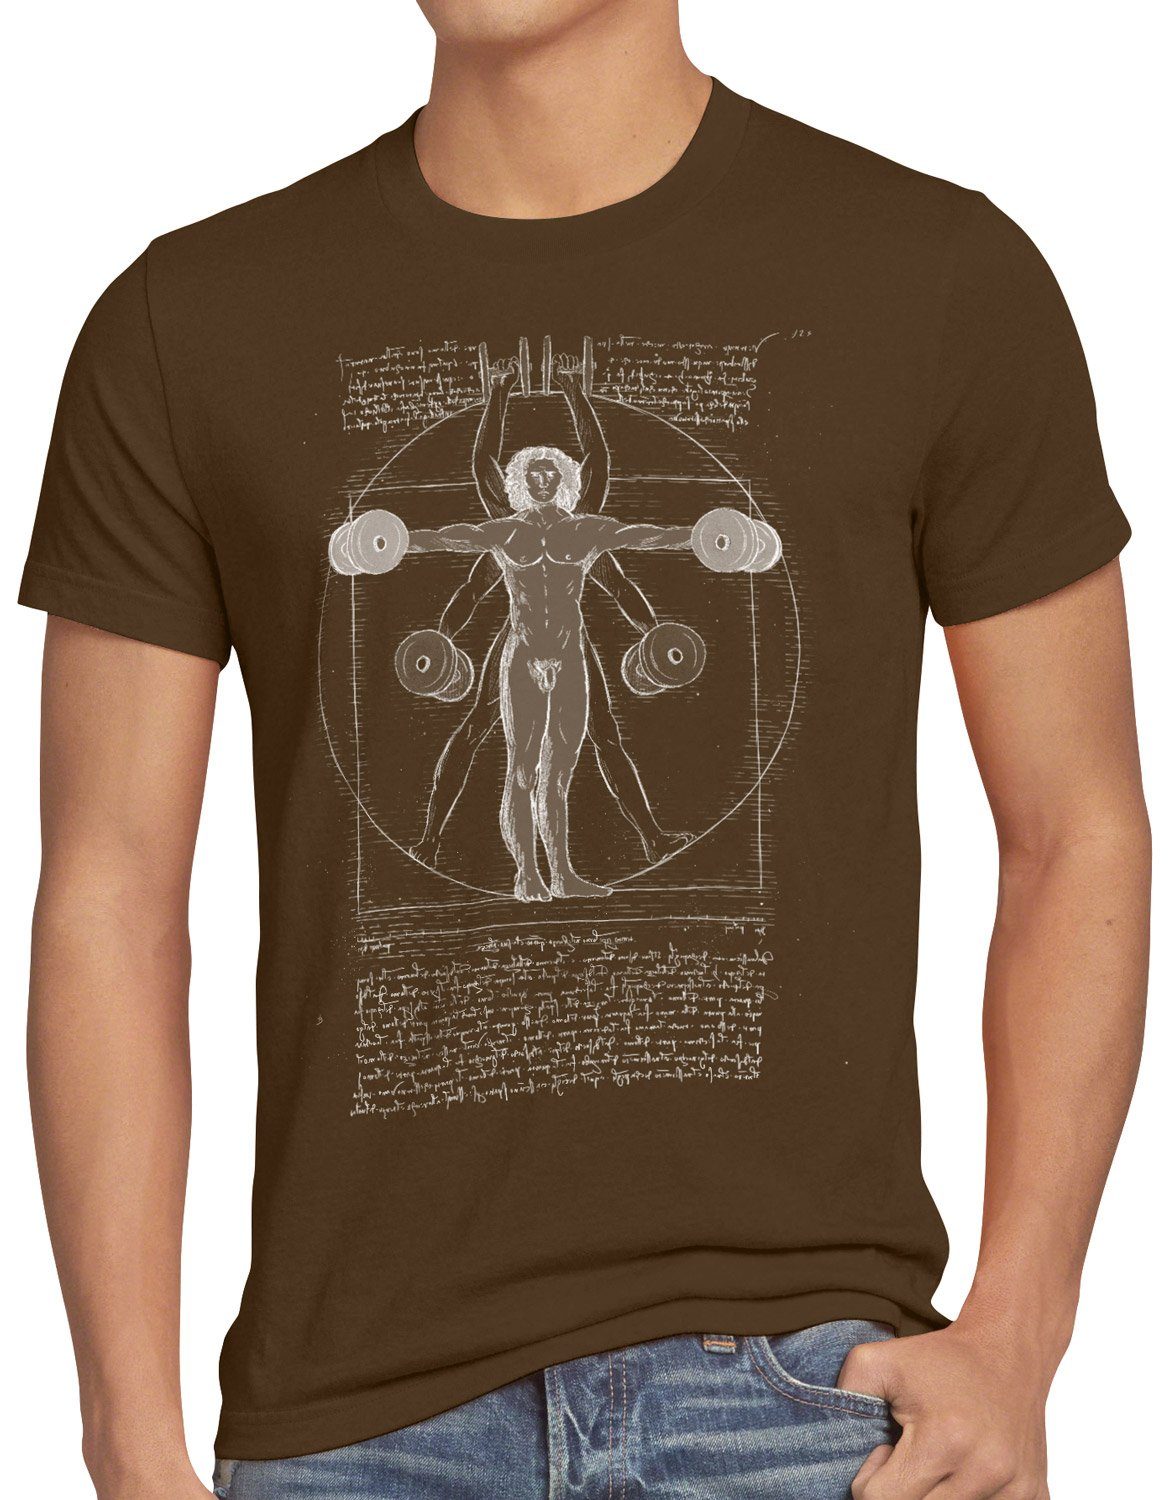 Vitruvianischer T-Shirt Herren rudern training butterfly Print-Shirt Kurzhantel braun style3 mit Mensch